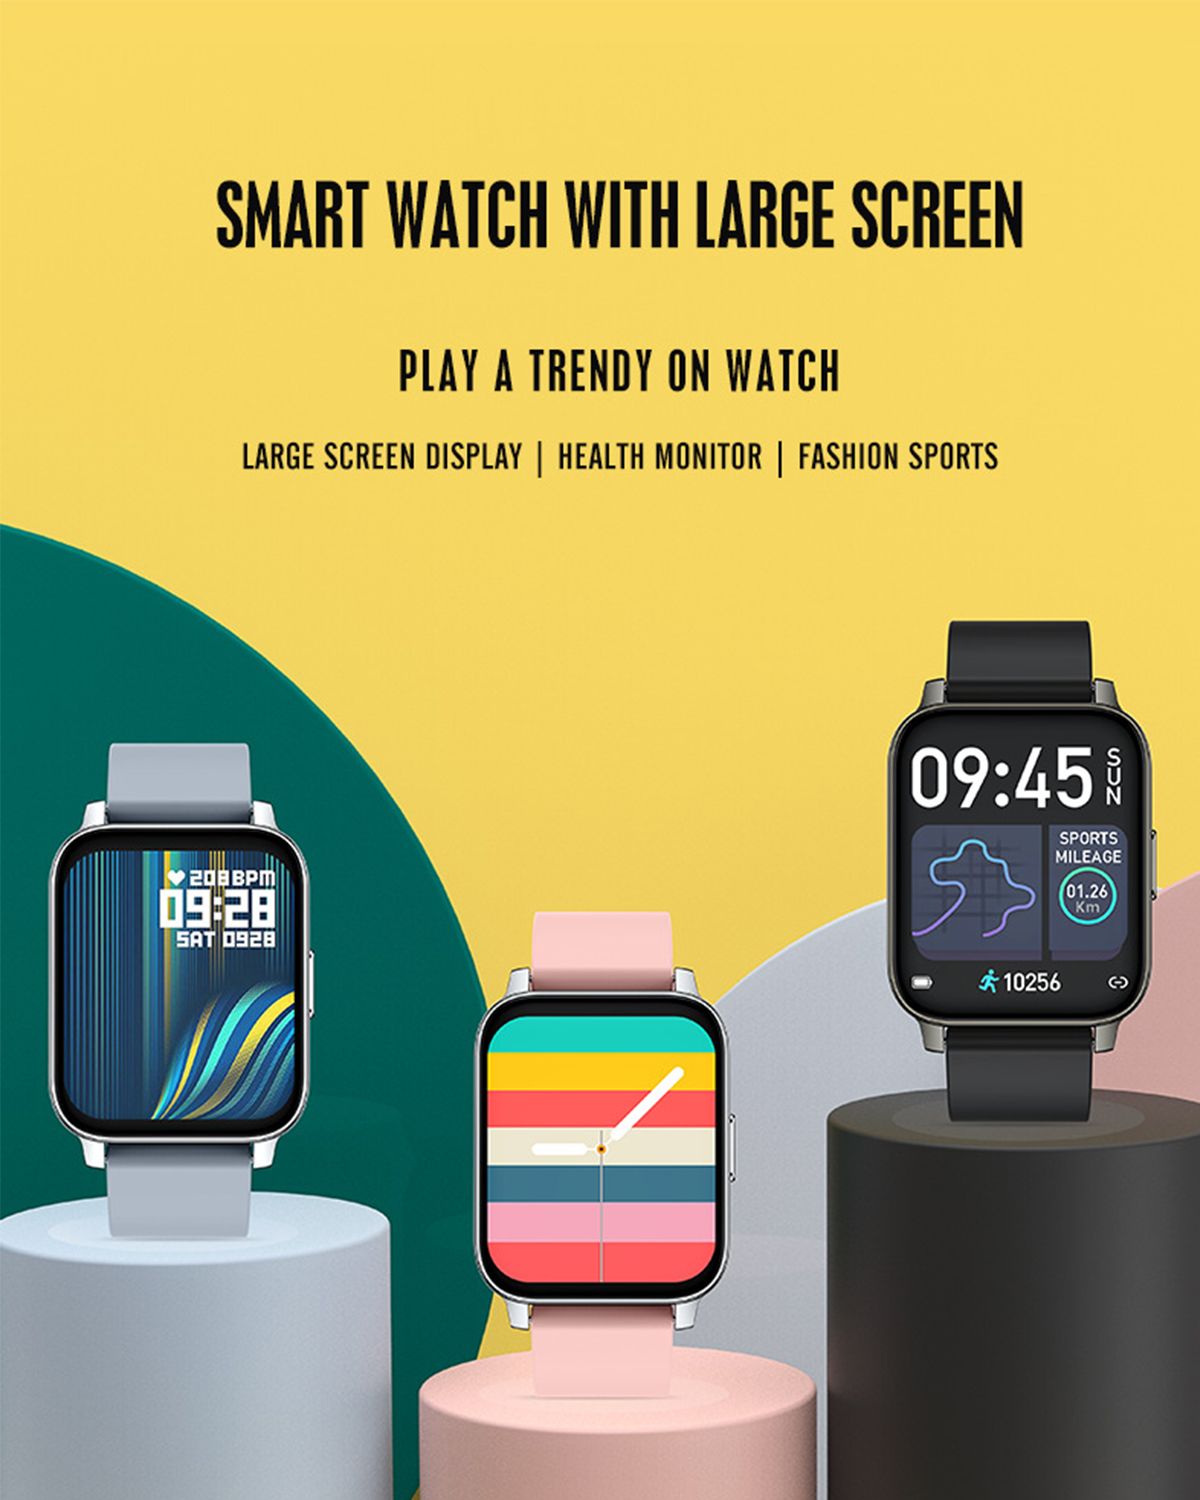 BRIGHTAKE Smartwatch 1.69 Full Smartwatch Silikon, Rosa Metall-Design, Wasserdicht - Sportmodi, Touch Mehrere IP67